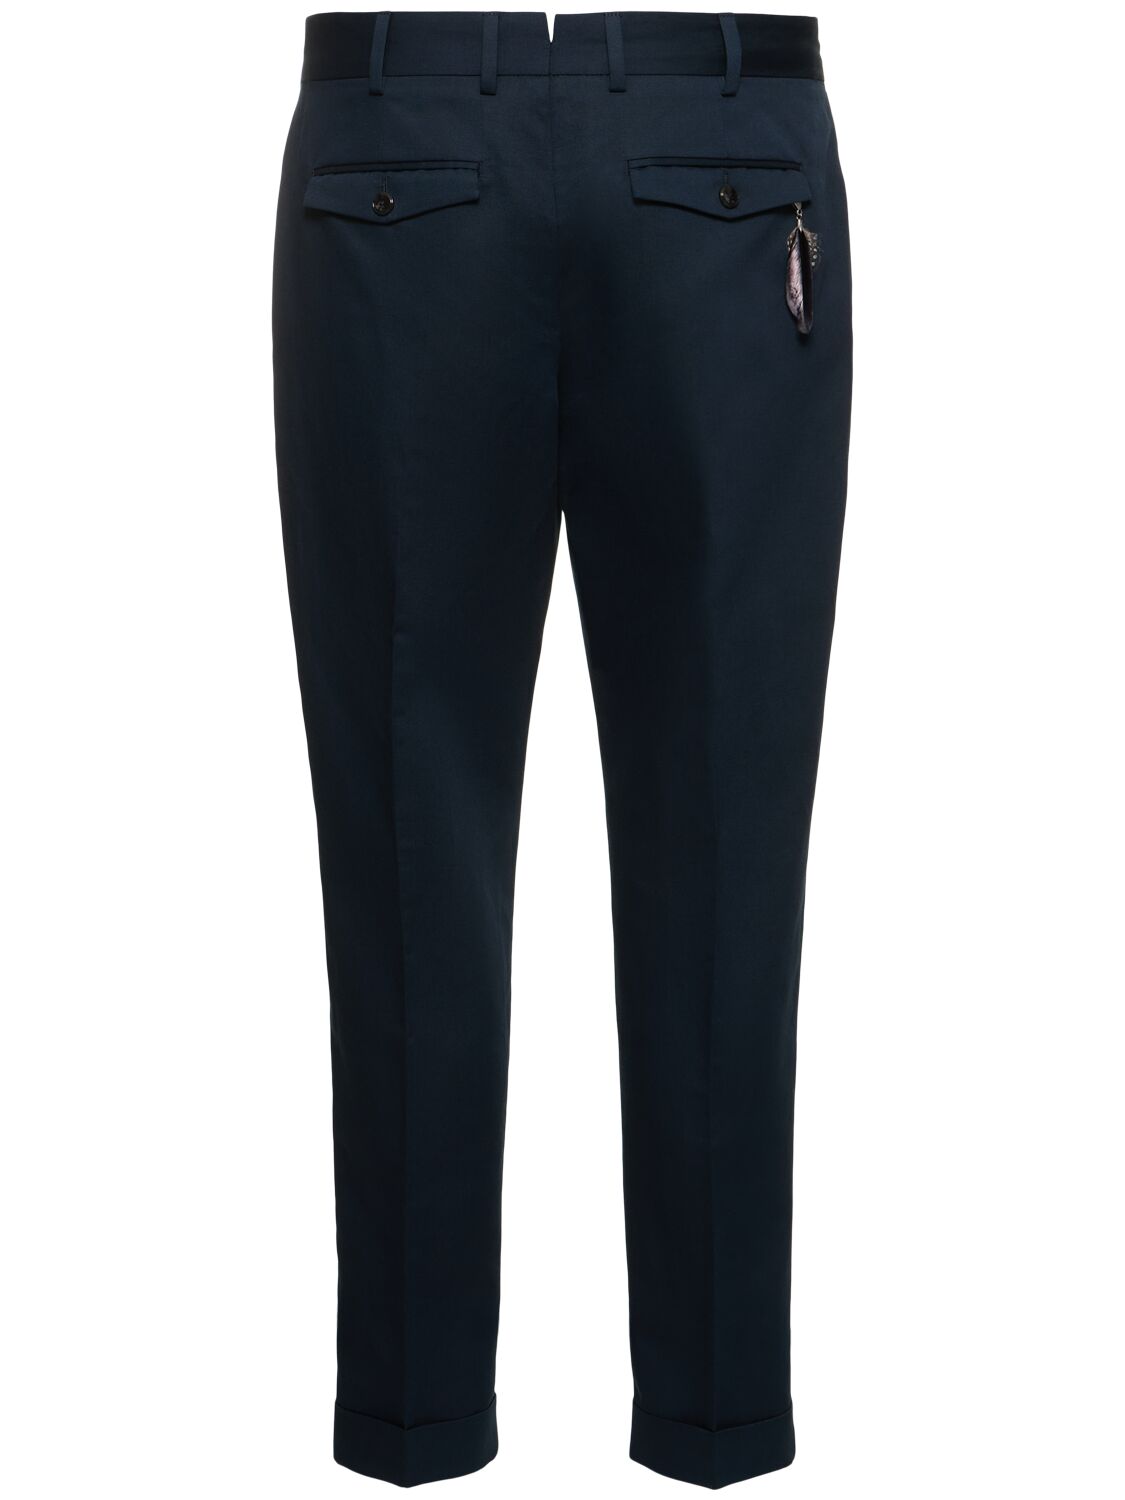 Shop Pt Torino Rebel Cotton & Linen Pants In Navy